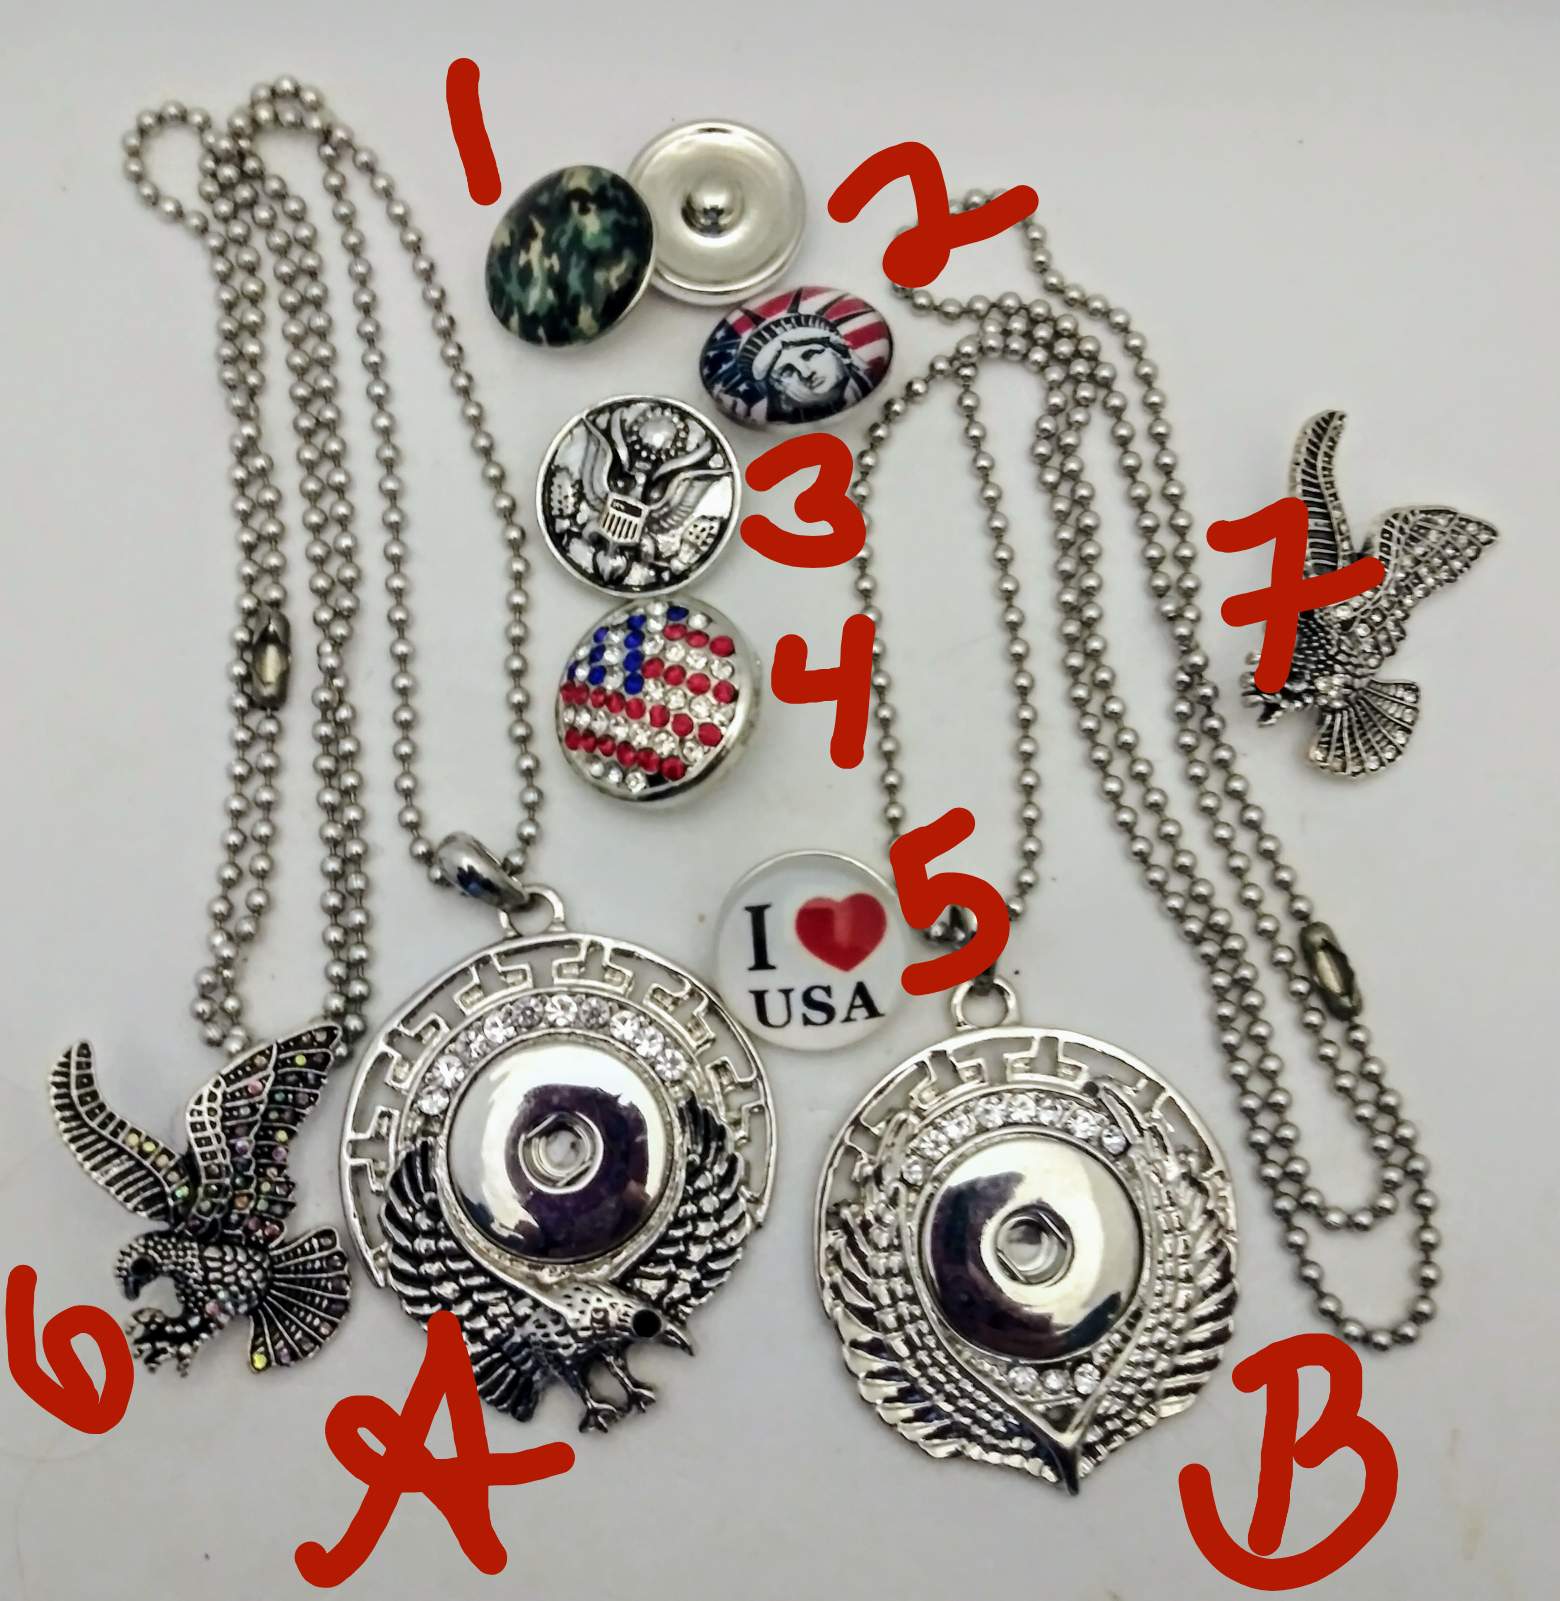 Patriotic USA snaps and pendants 18mm